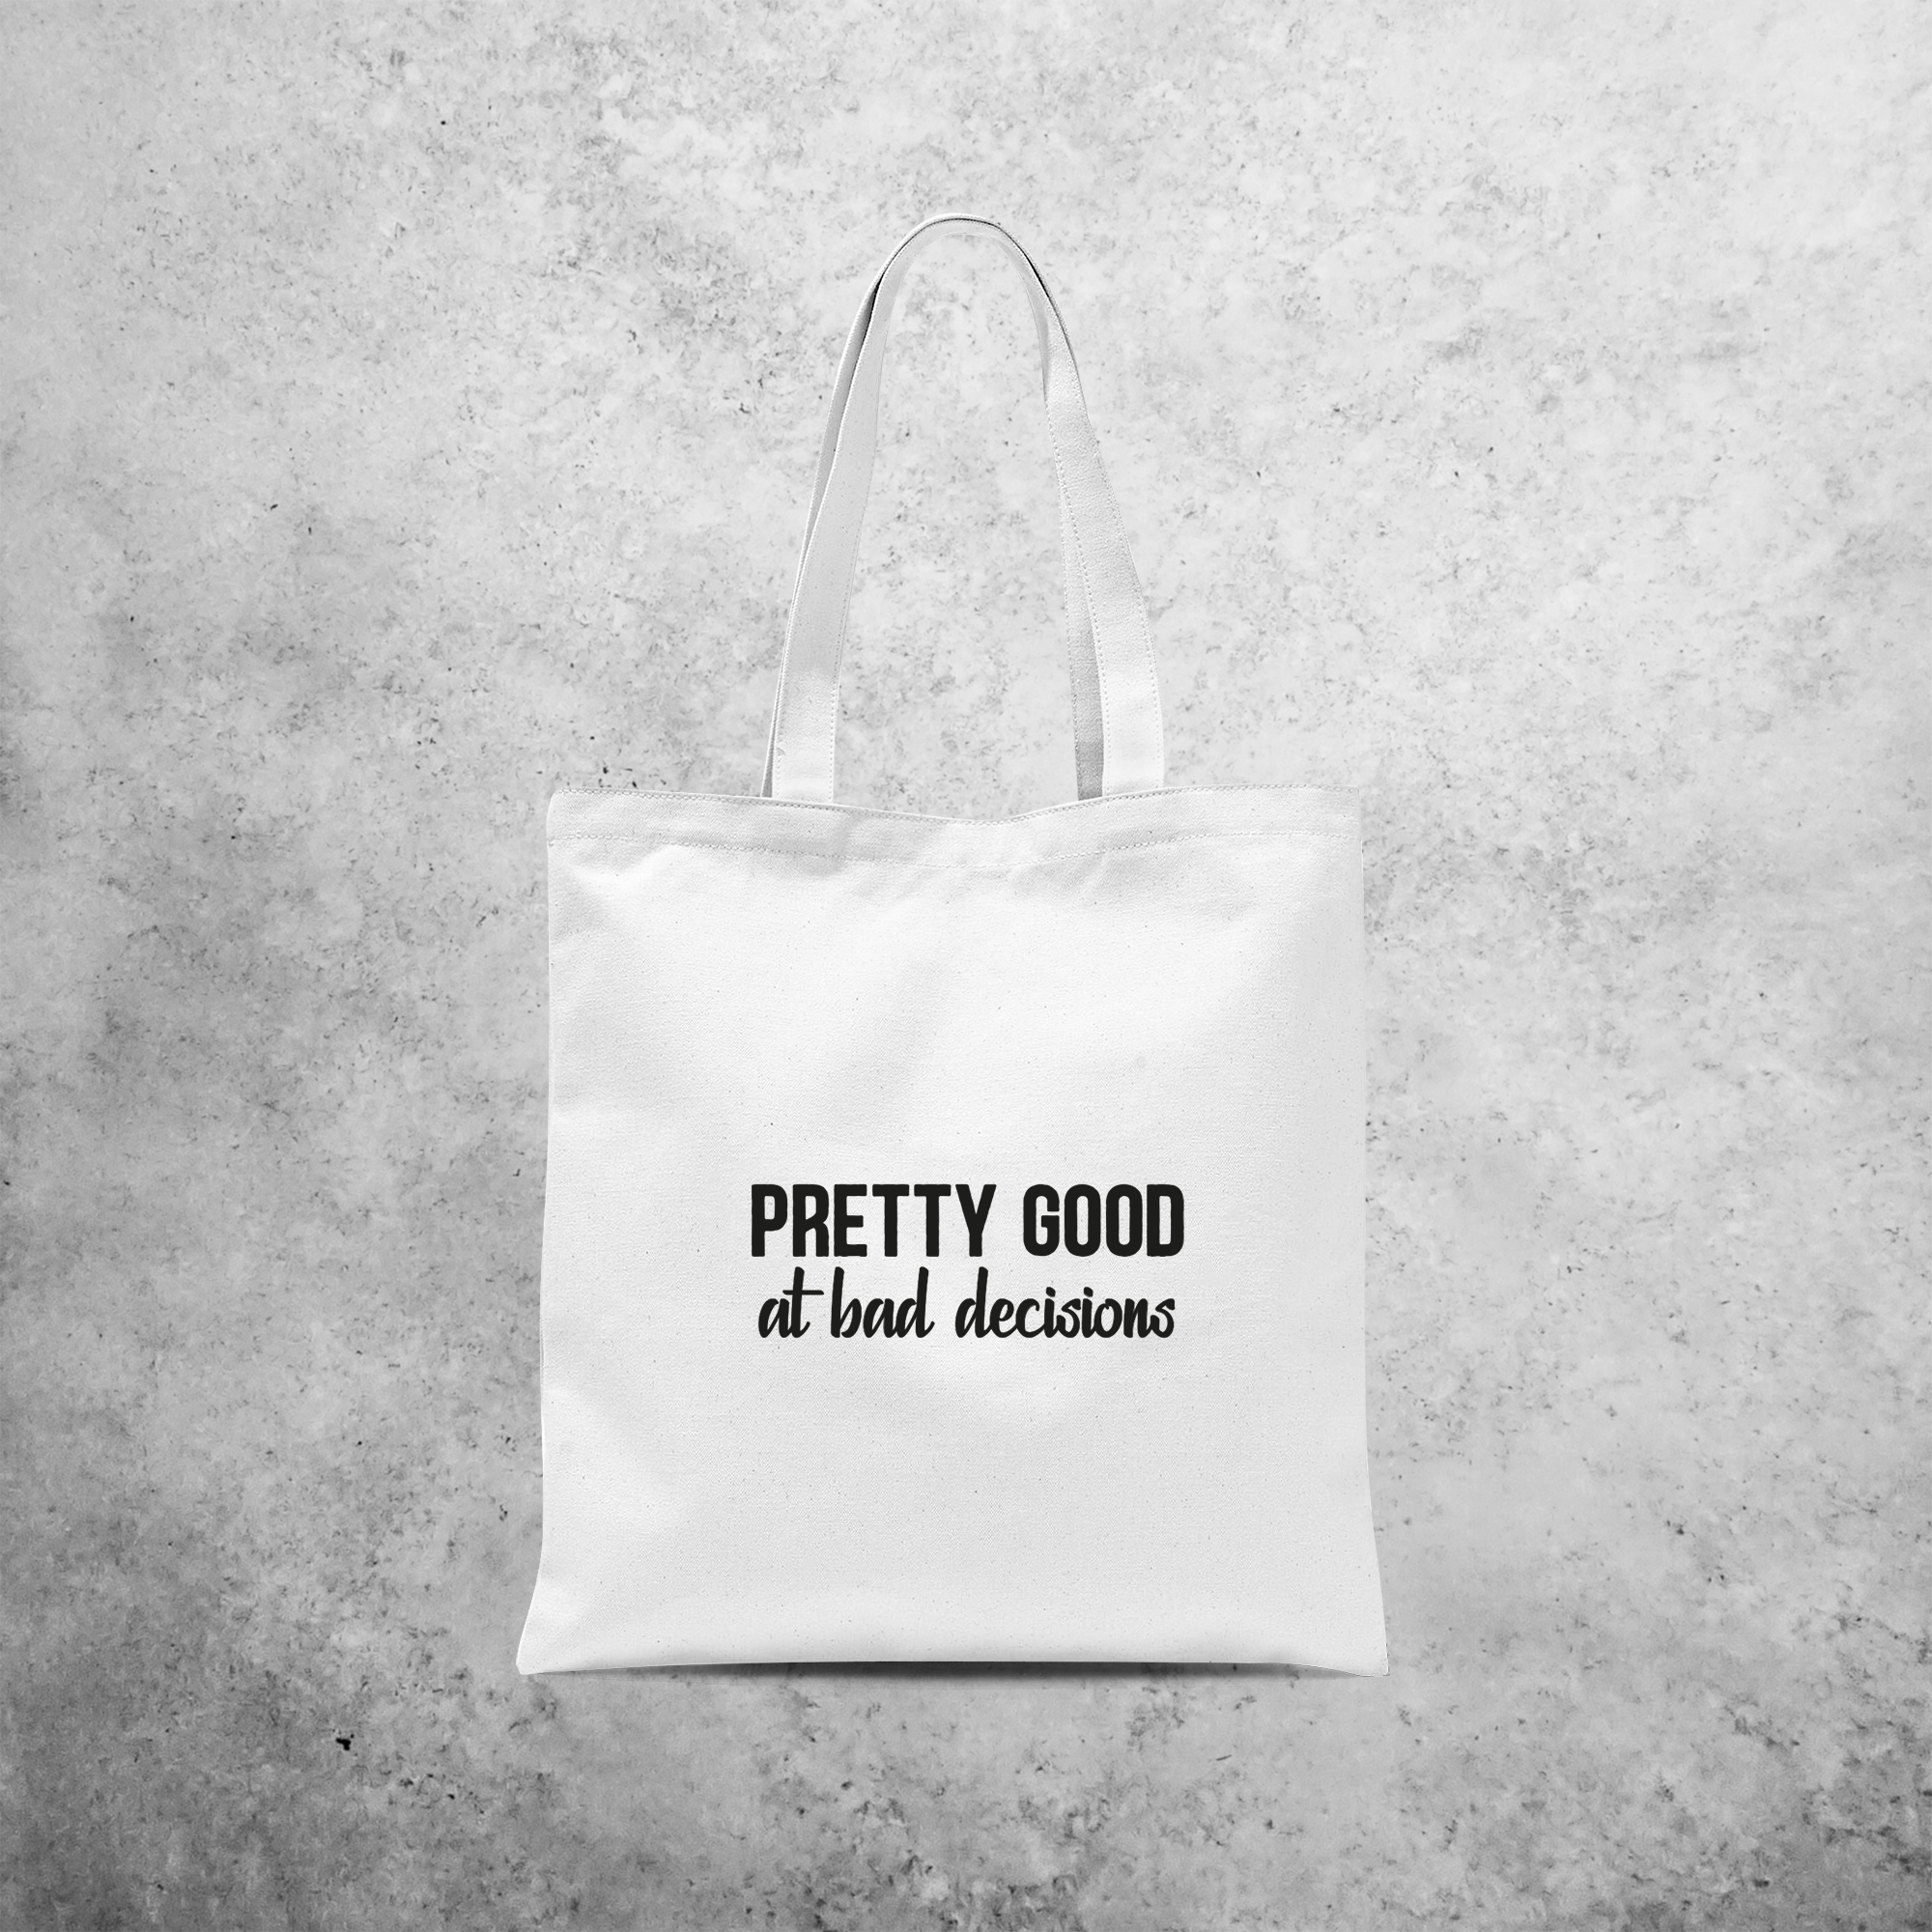 'Pretty good at bad decisions' tote bag